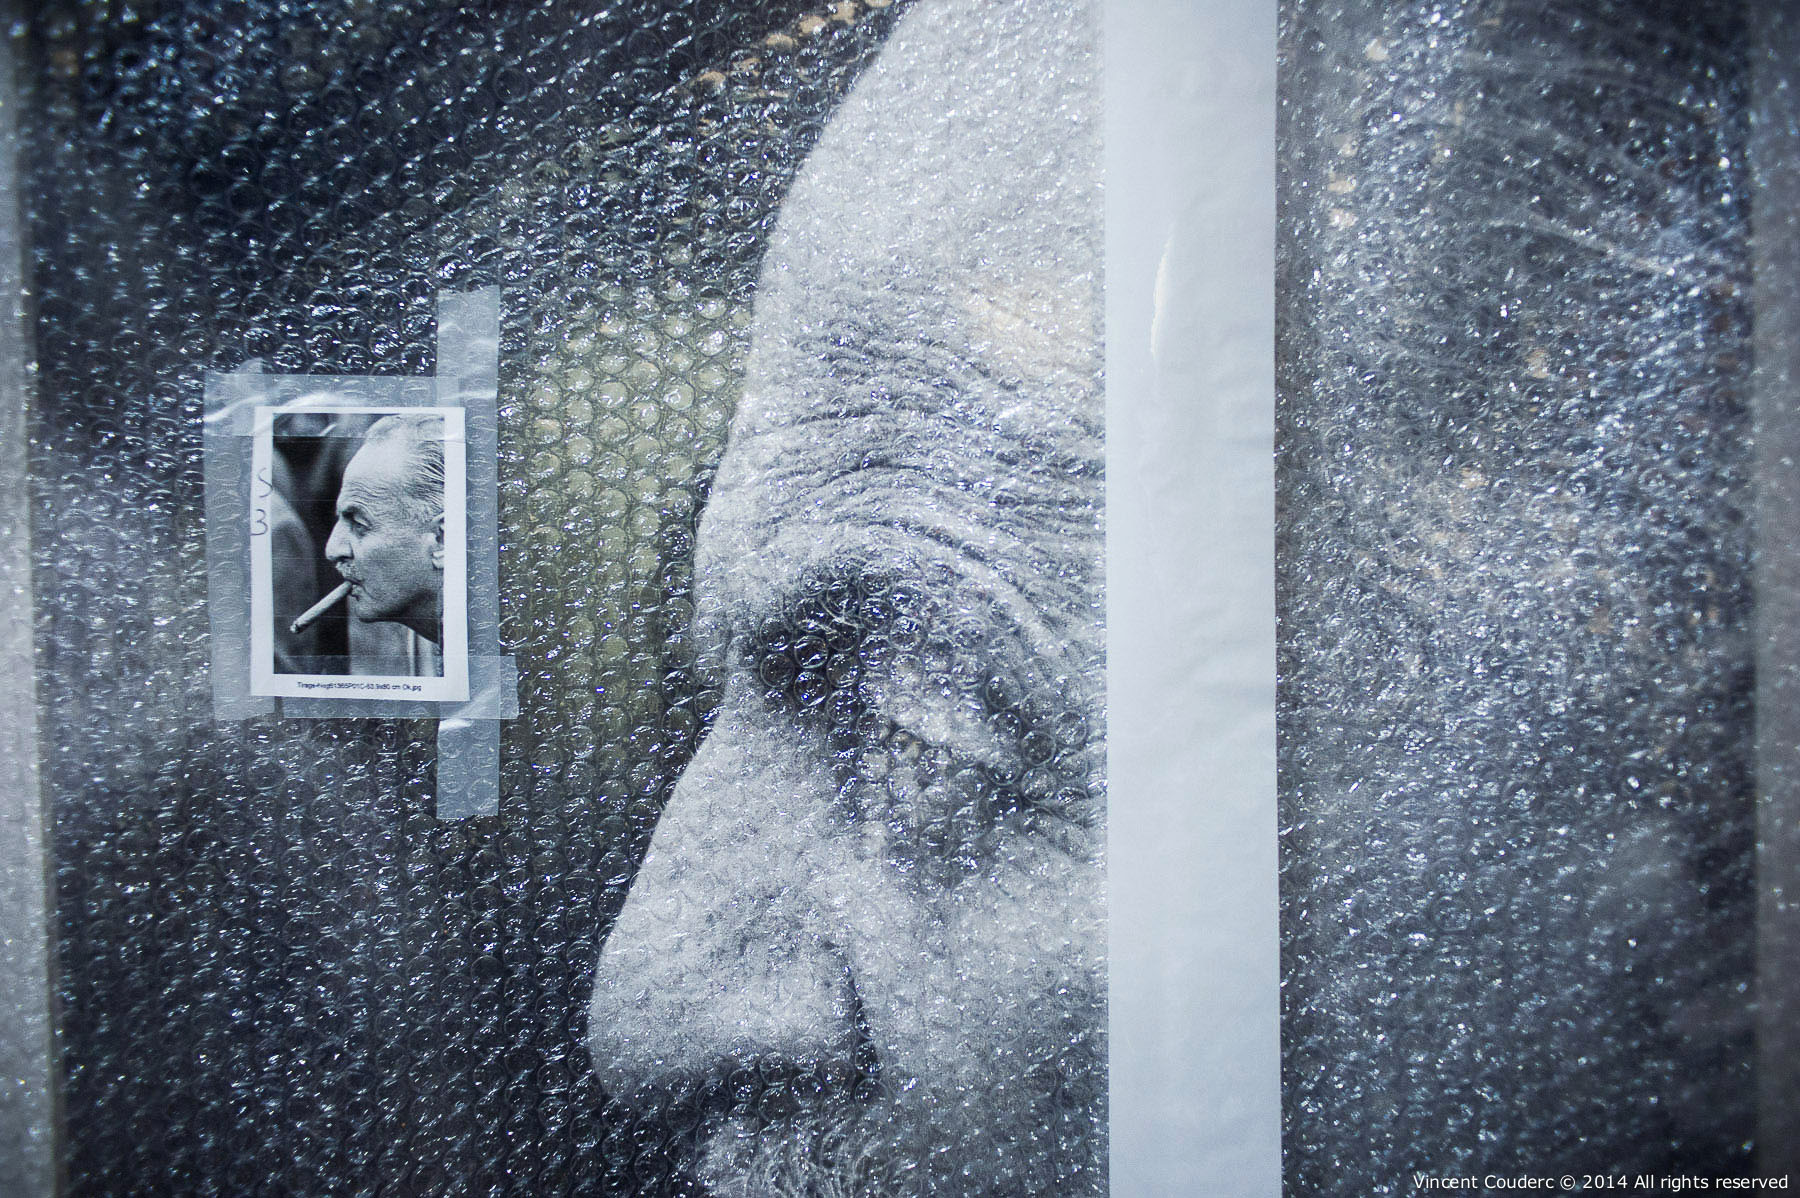  Darryl F. Zanuck&nbsp;  Exposition sur le travail du photographe Henri Dauman Palais d'Iéna,&nbsp;Paris, 2014.   www.manhattan-darkroom.com  